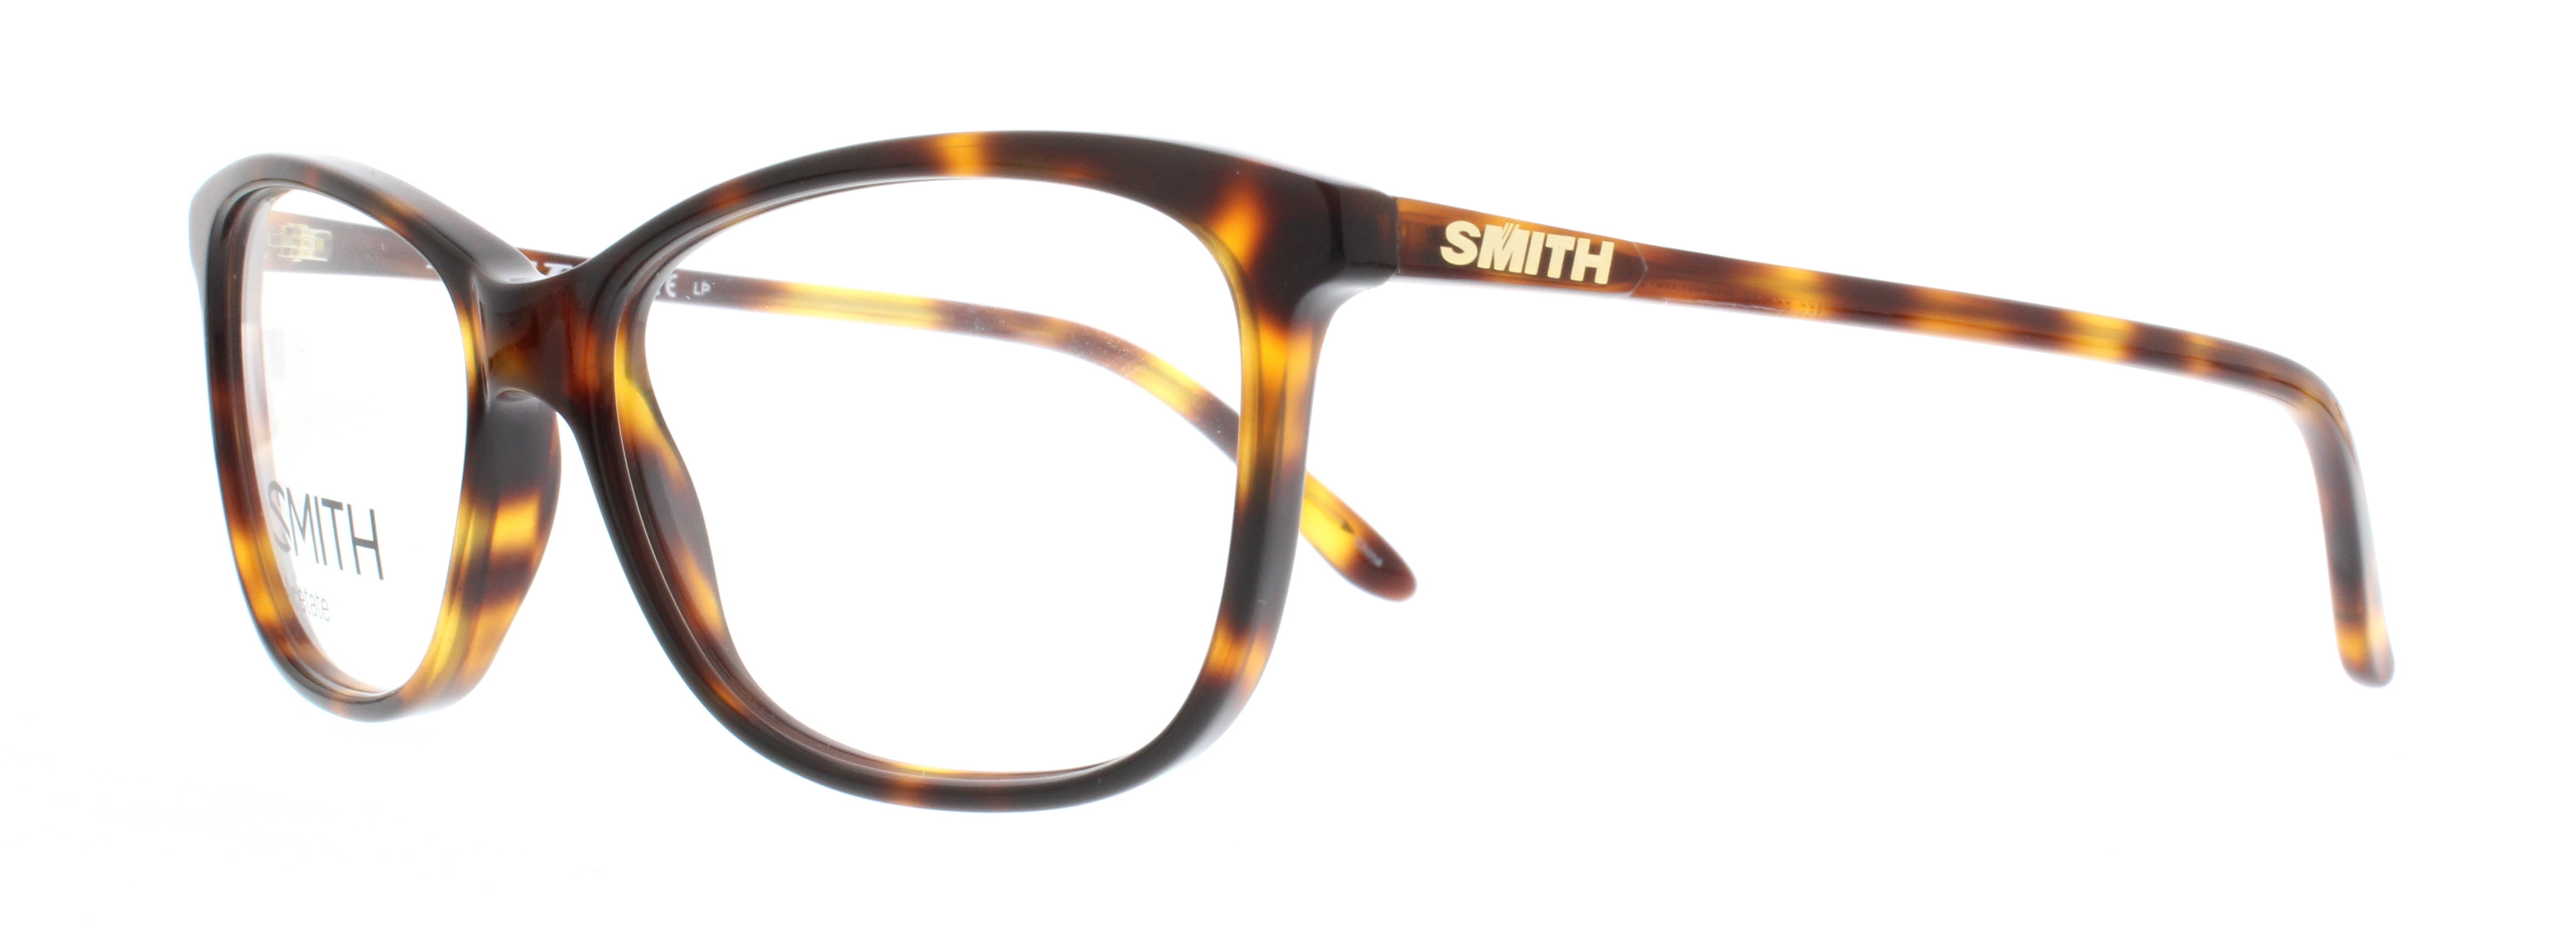 Picture of Smith Eyeglasses JADEN